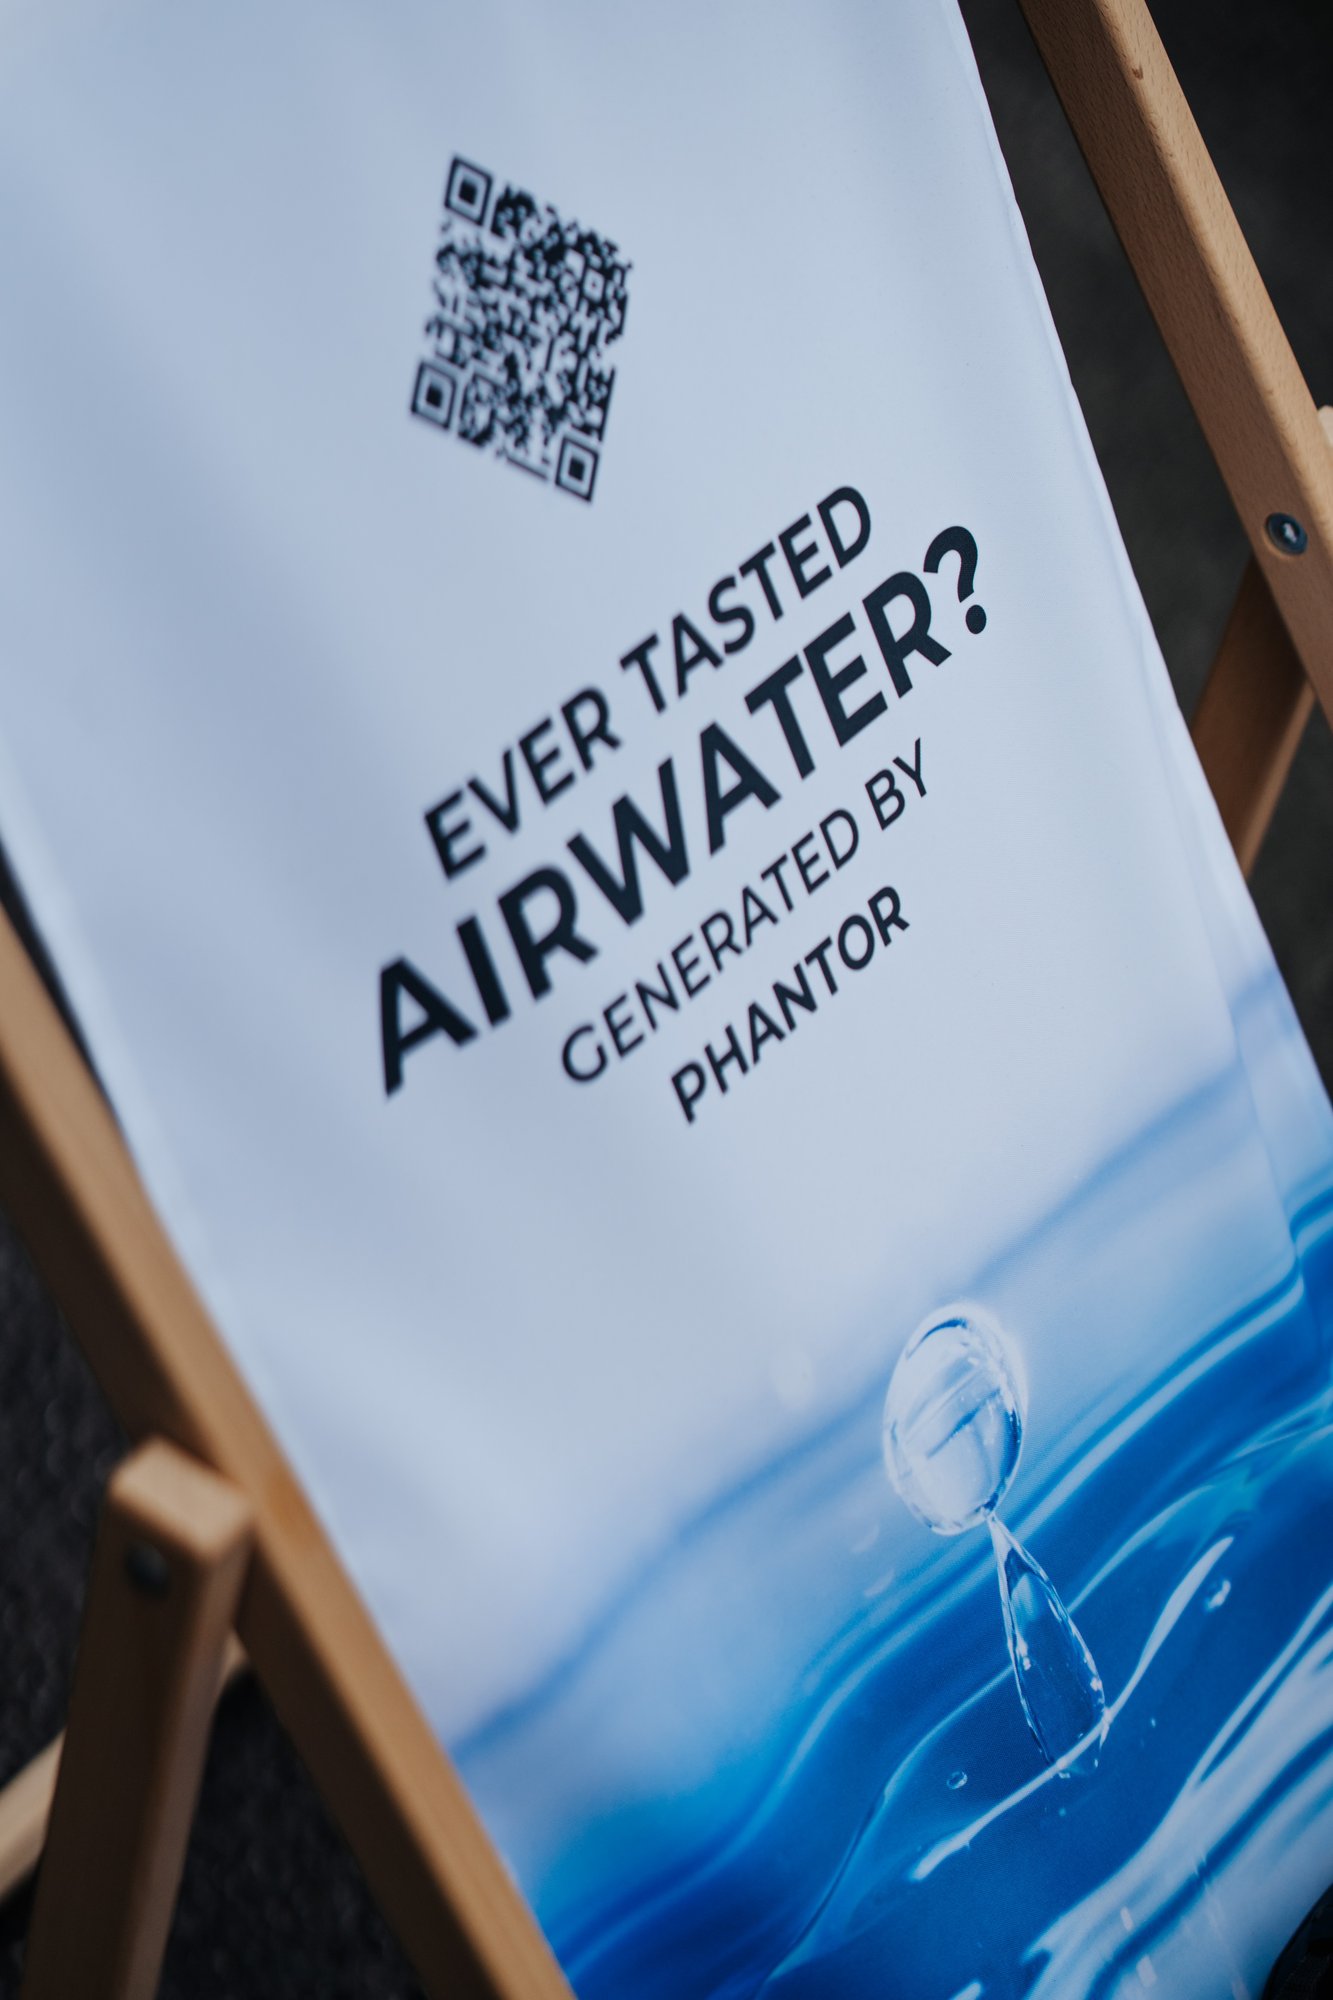 Ever tasted Airwater